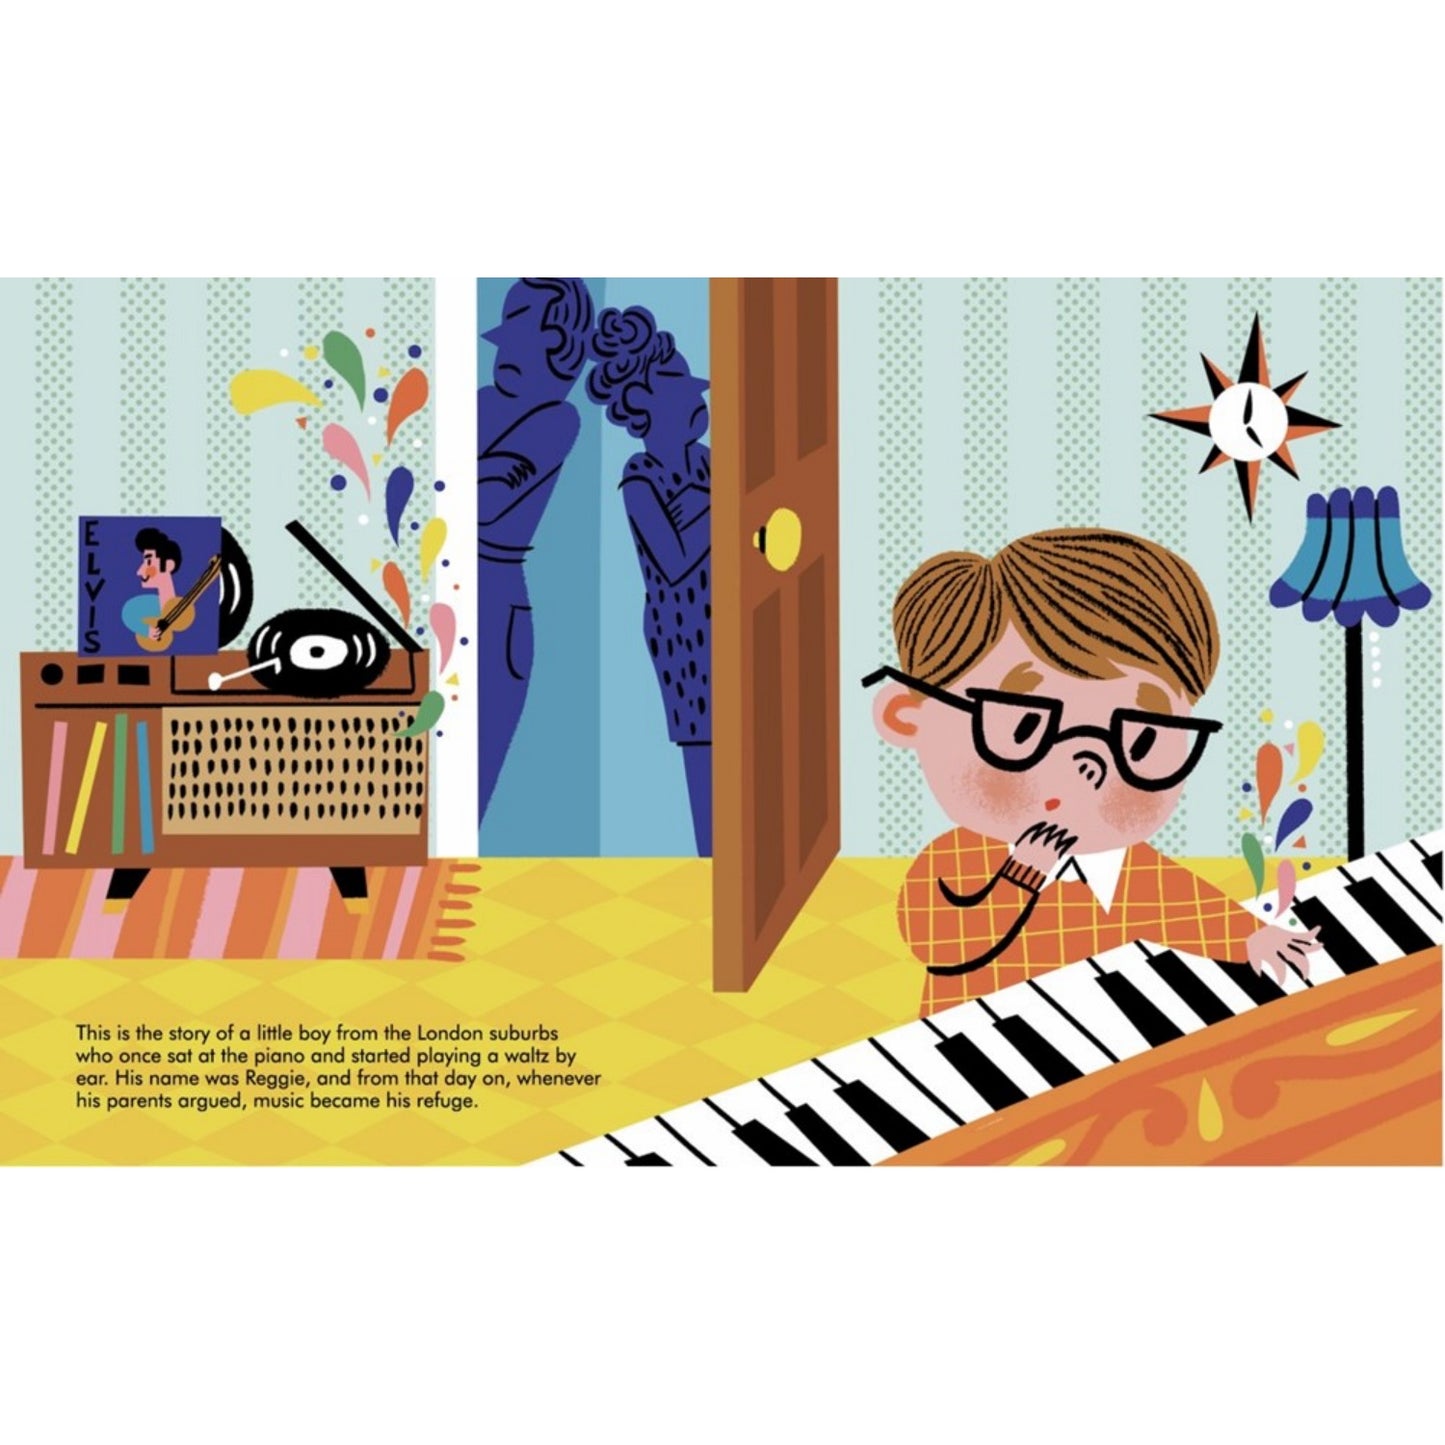 Elton John | Little People, BIG DREAMS | Children’s Book on Biographies